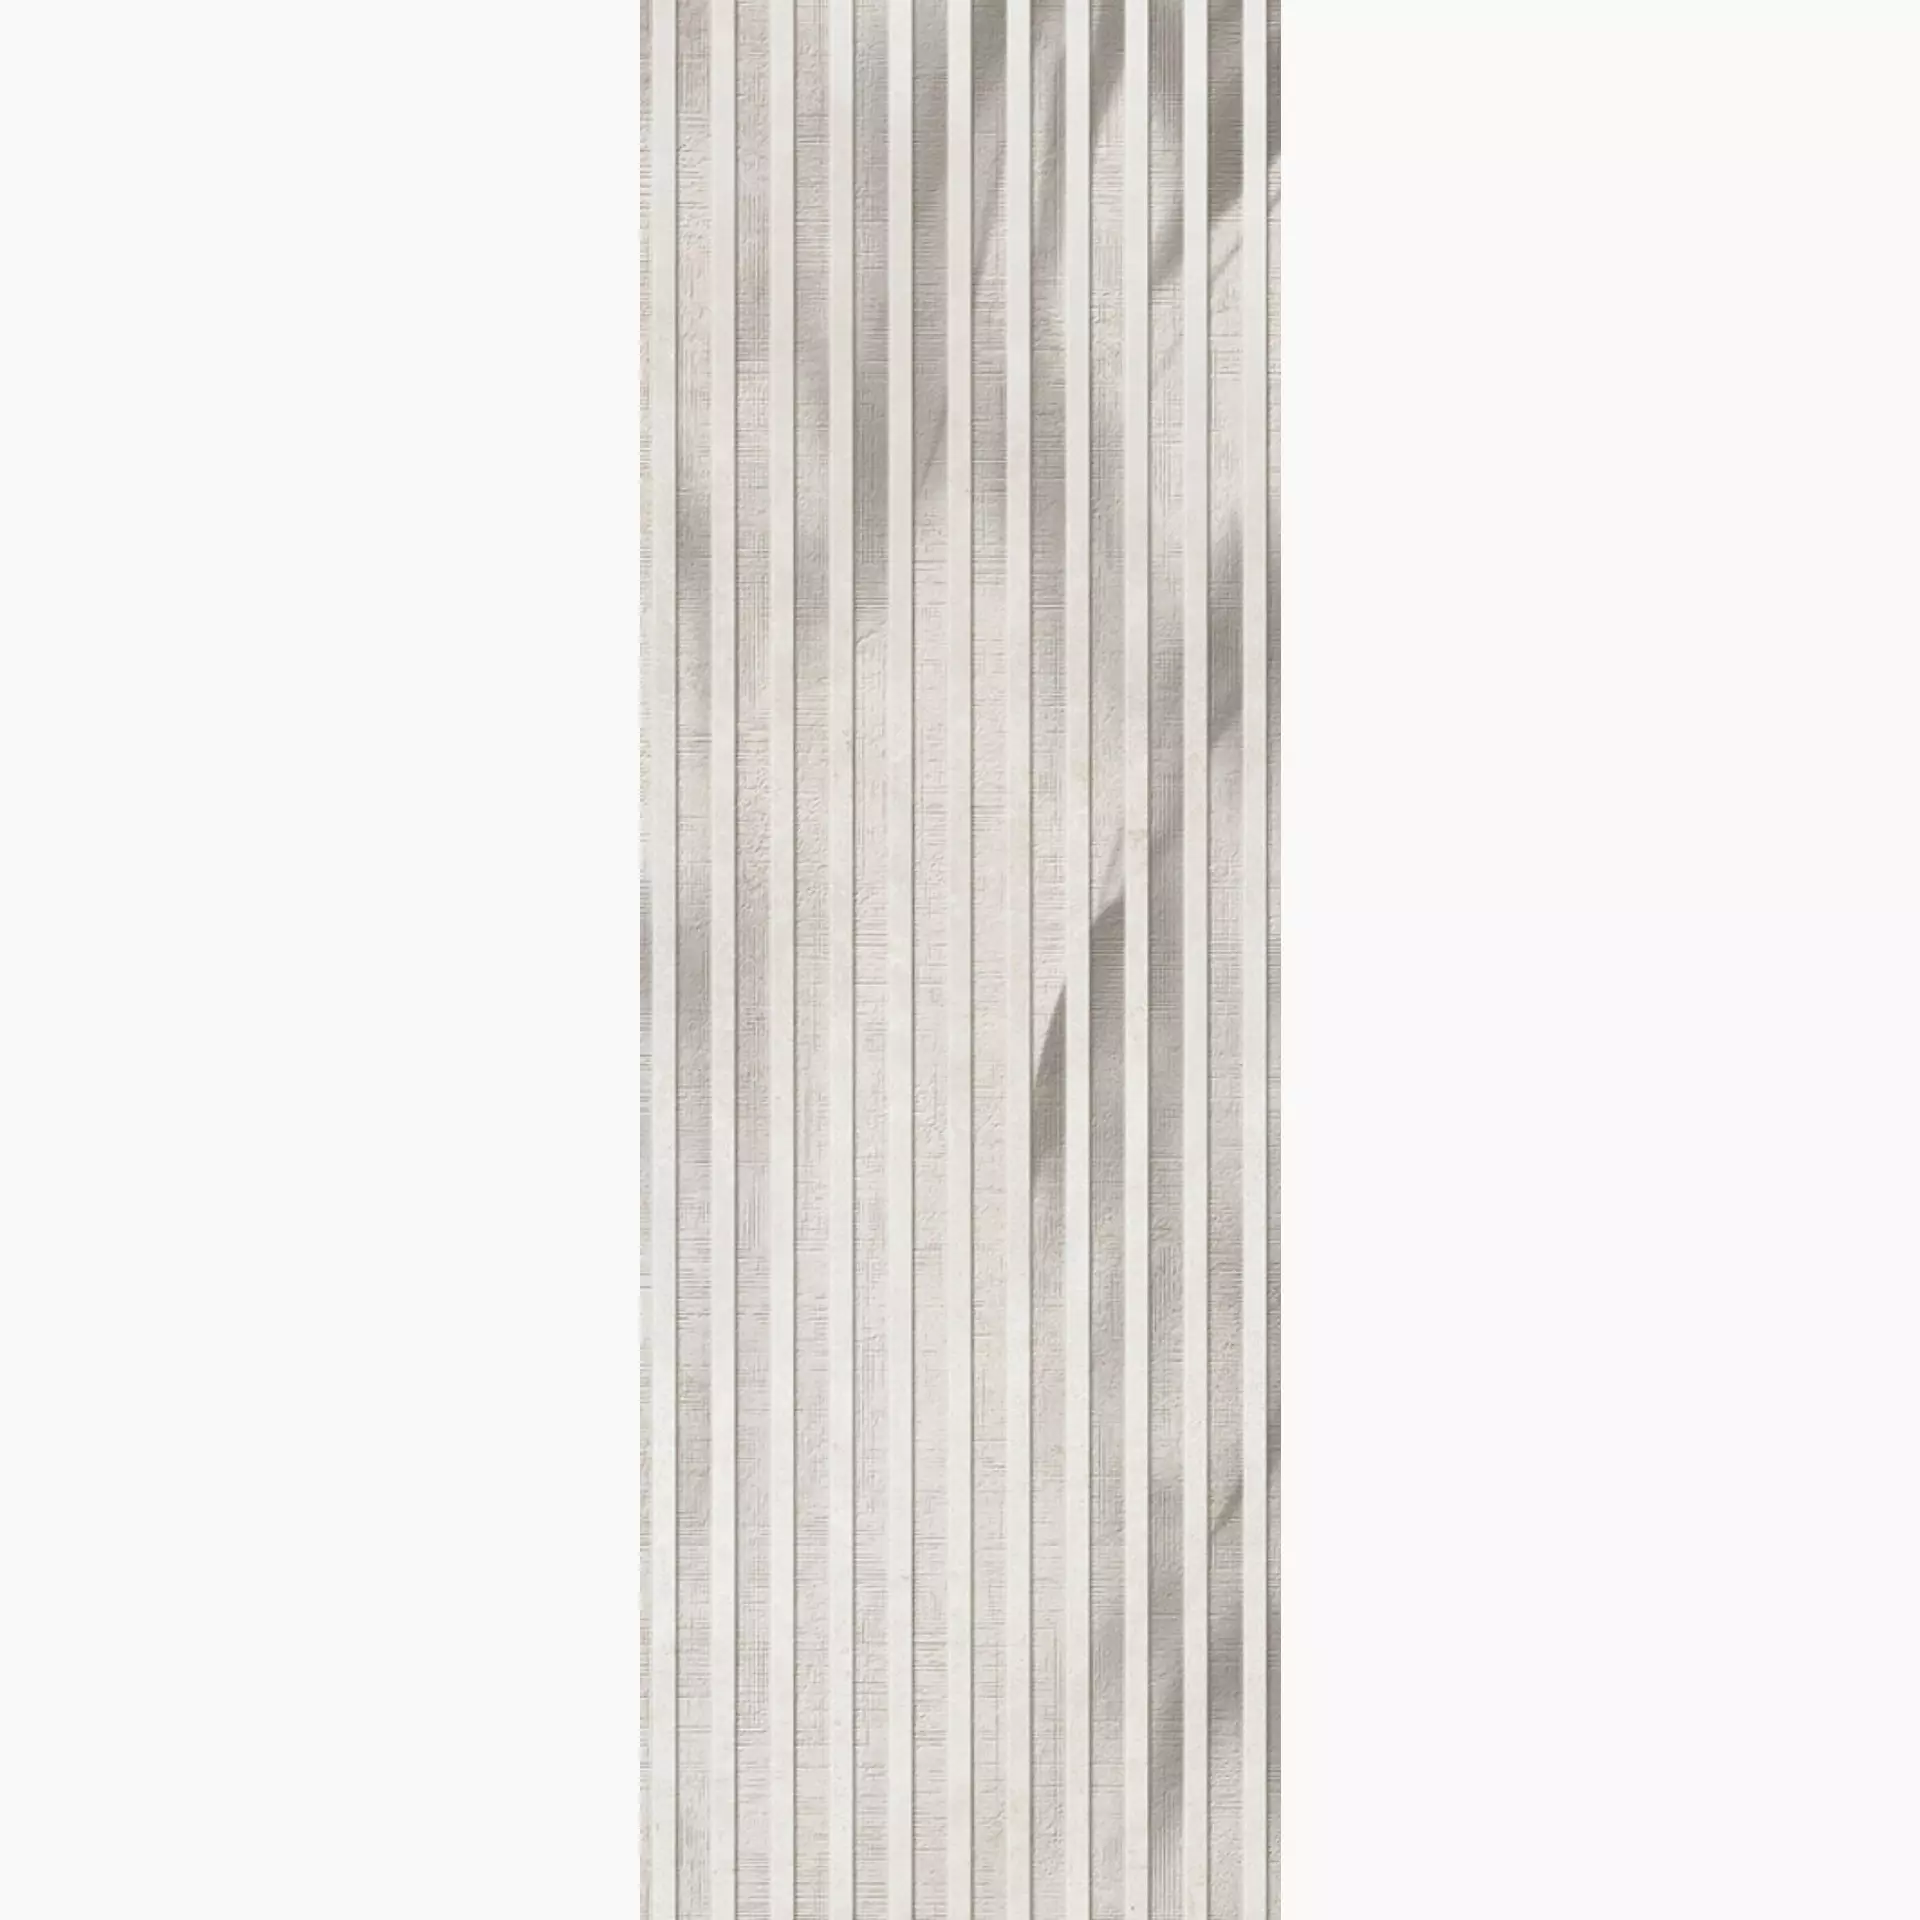 Villeroy & Boch Ombra White Matt Decor 1310-IA12 30x90cm rectified 10mm